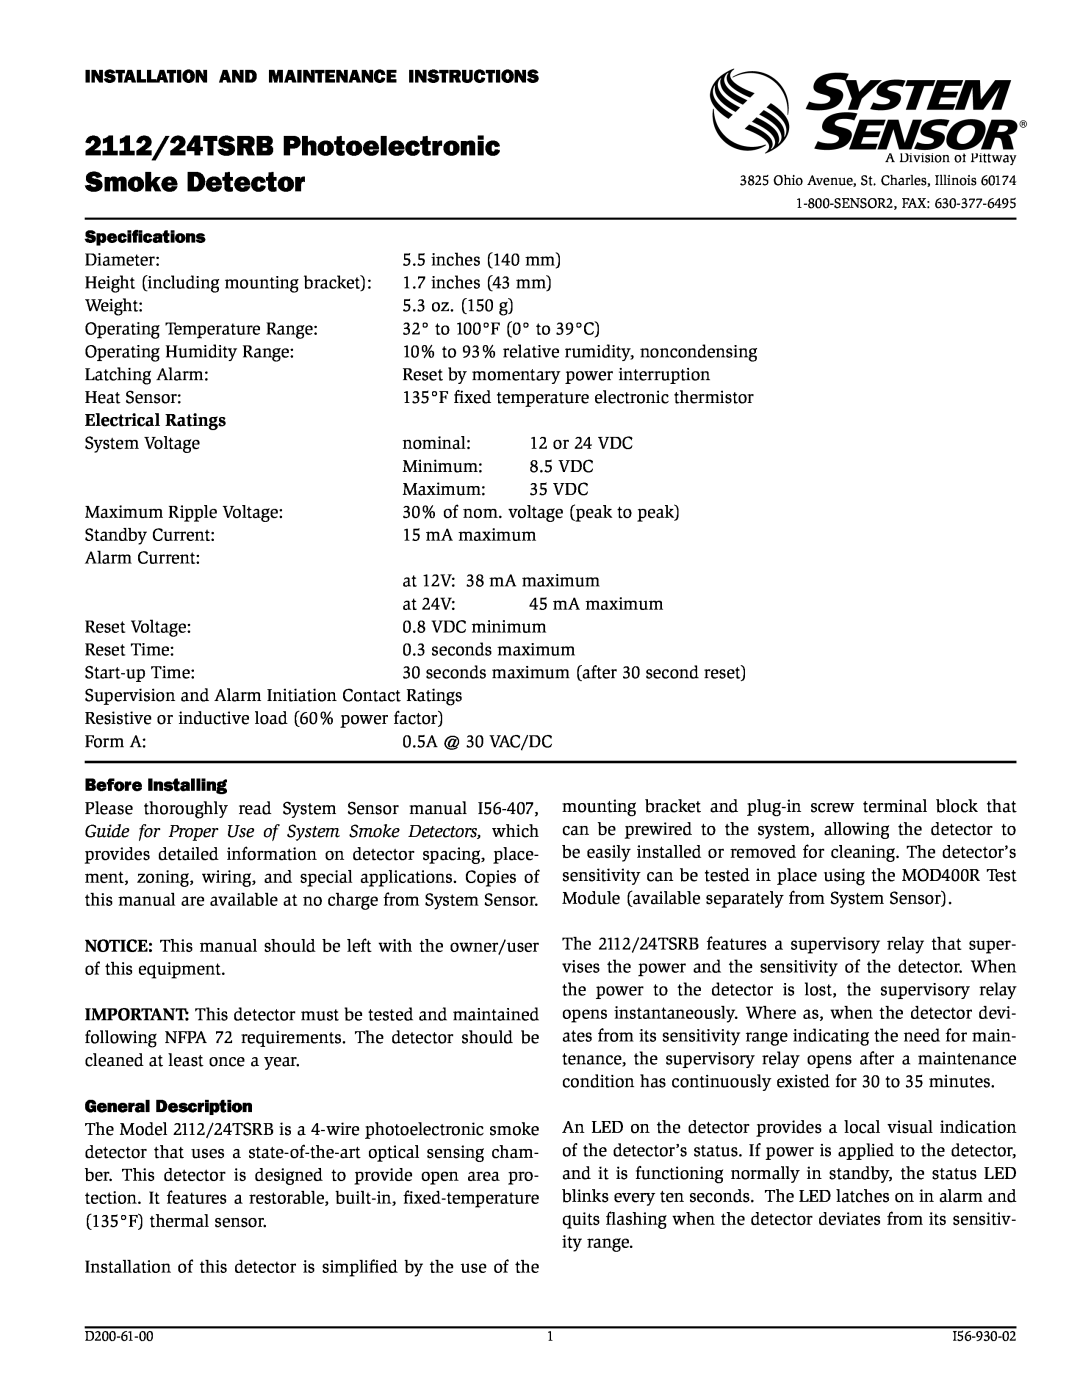 System Sensor manual Electrical Ratings, 2112/24TSRB Photoelectronic Smoke Detector 